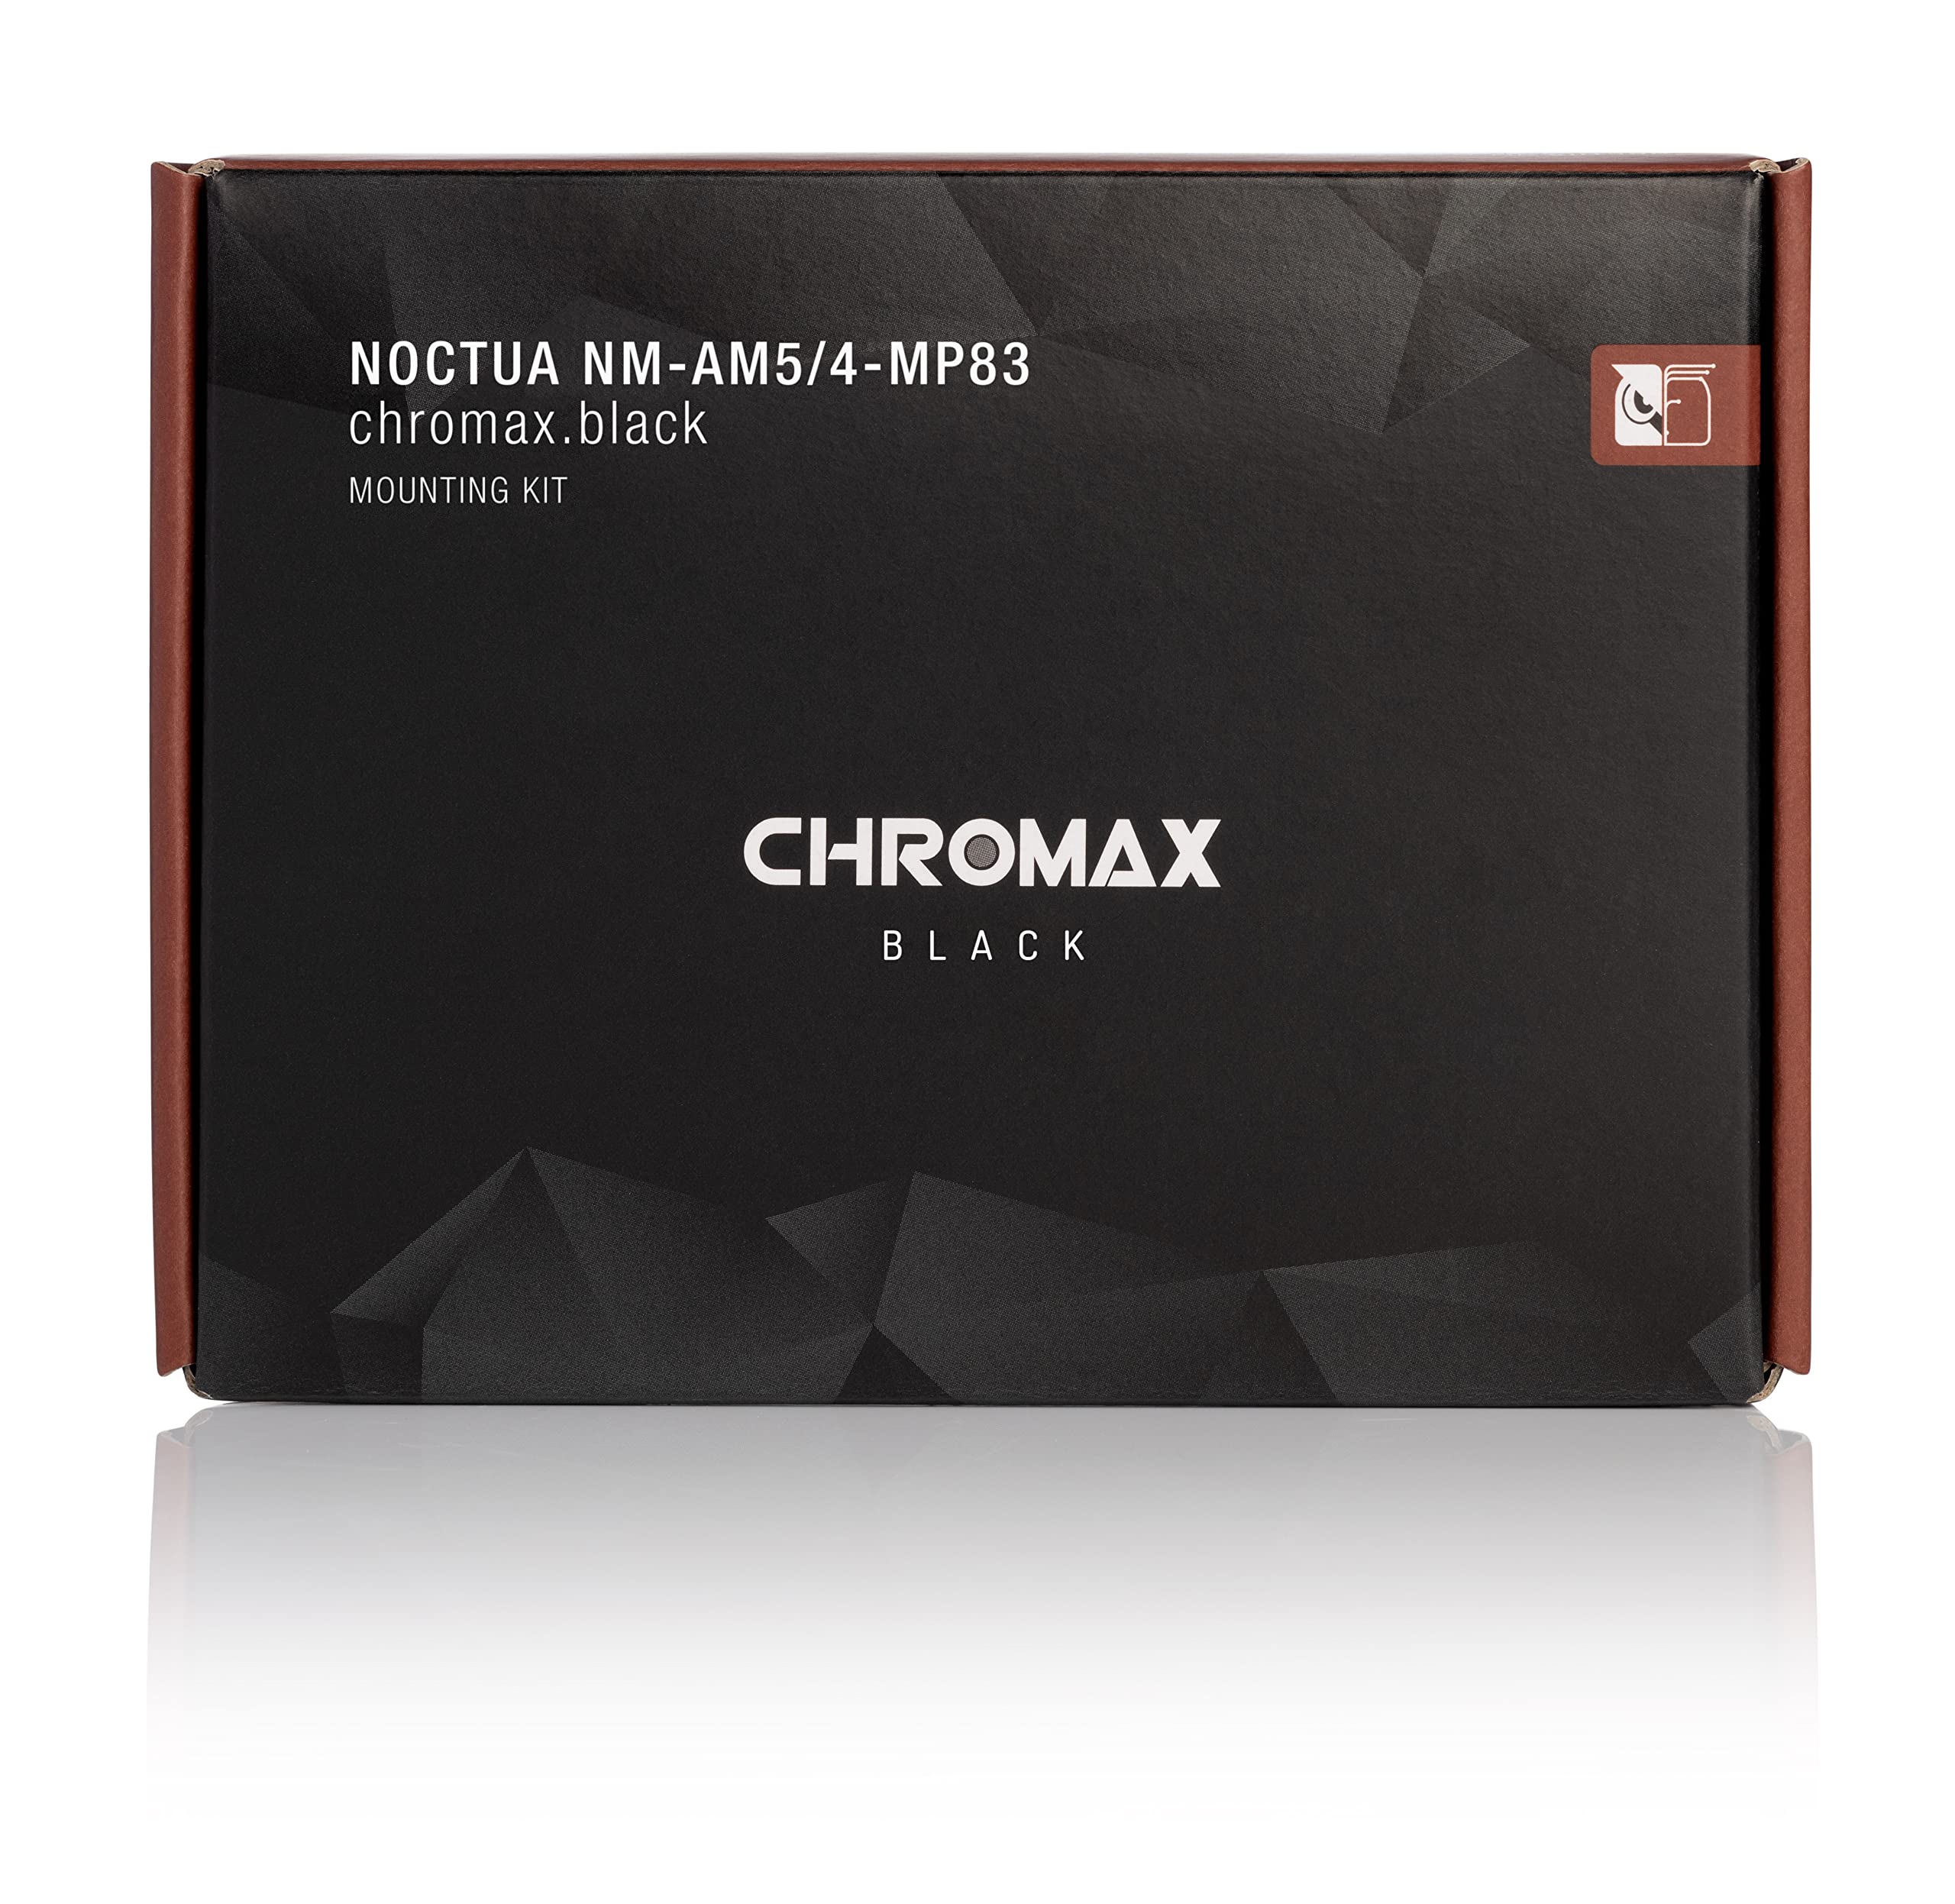 Mounting Kit Noctua NM-AM5/4-MP83 Chromax Black image